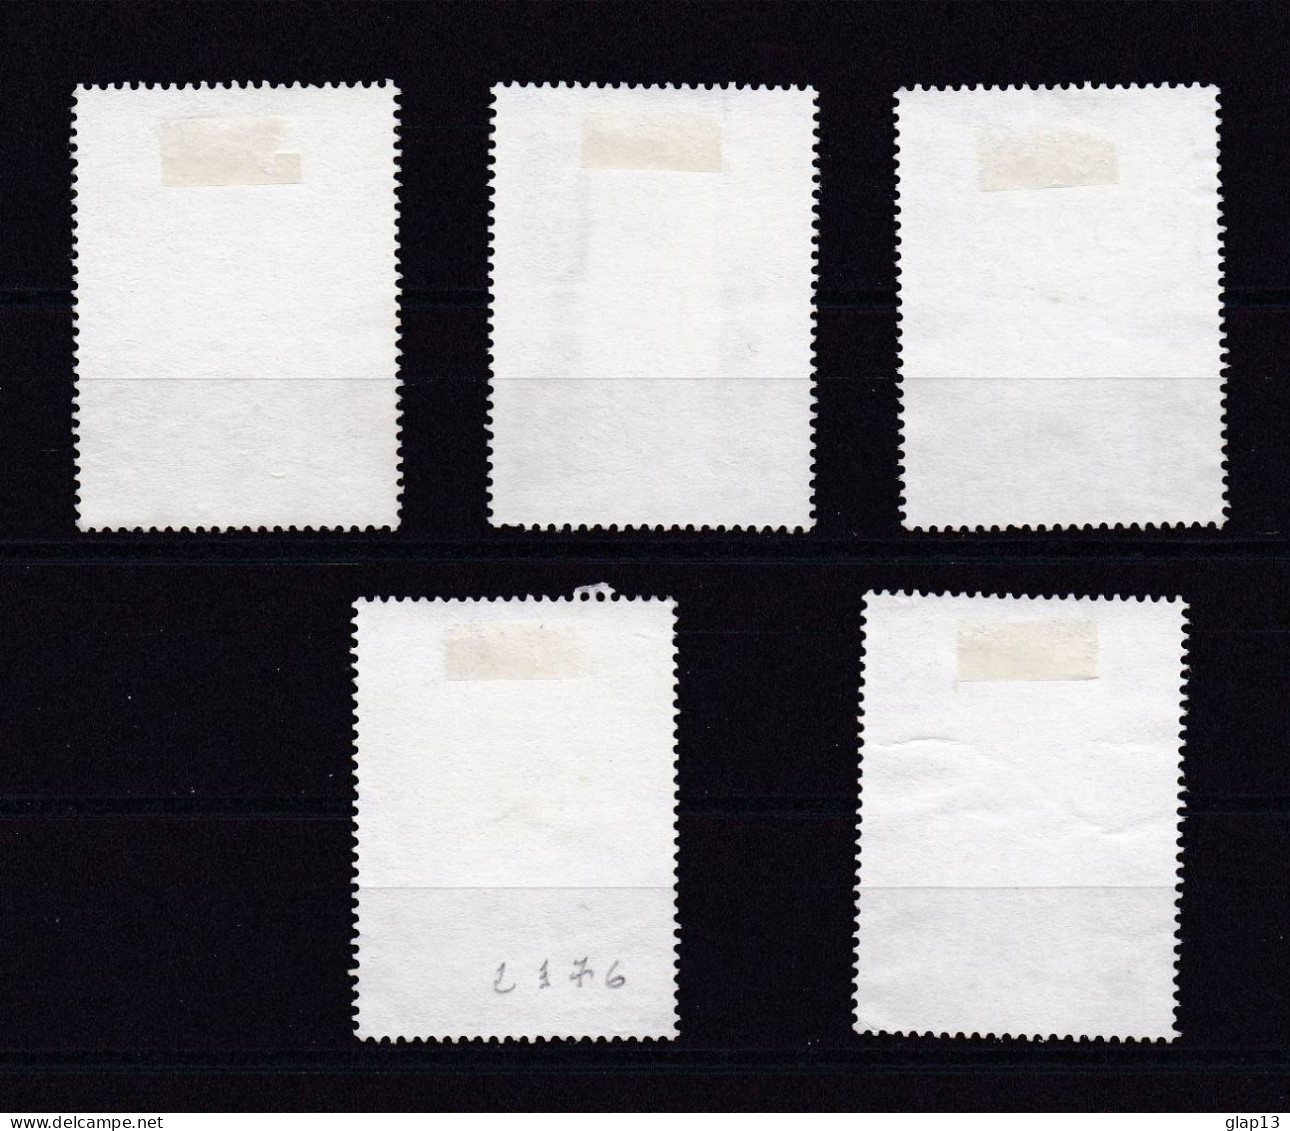 GRANDE-BRETAGNE 2002 TIMBRE N°2373/77 OBLITERE BOITES AUX LETTRES - Used Stamps